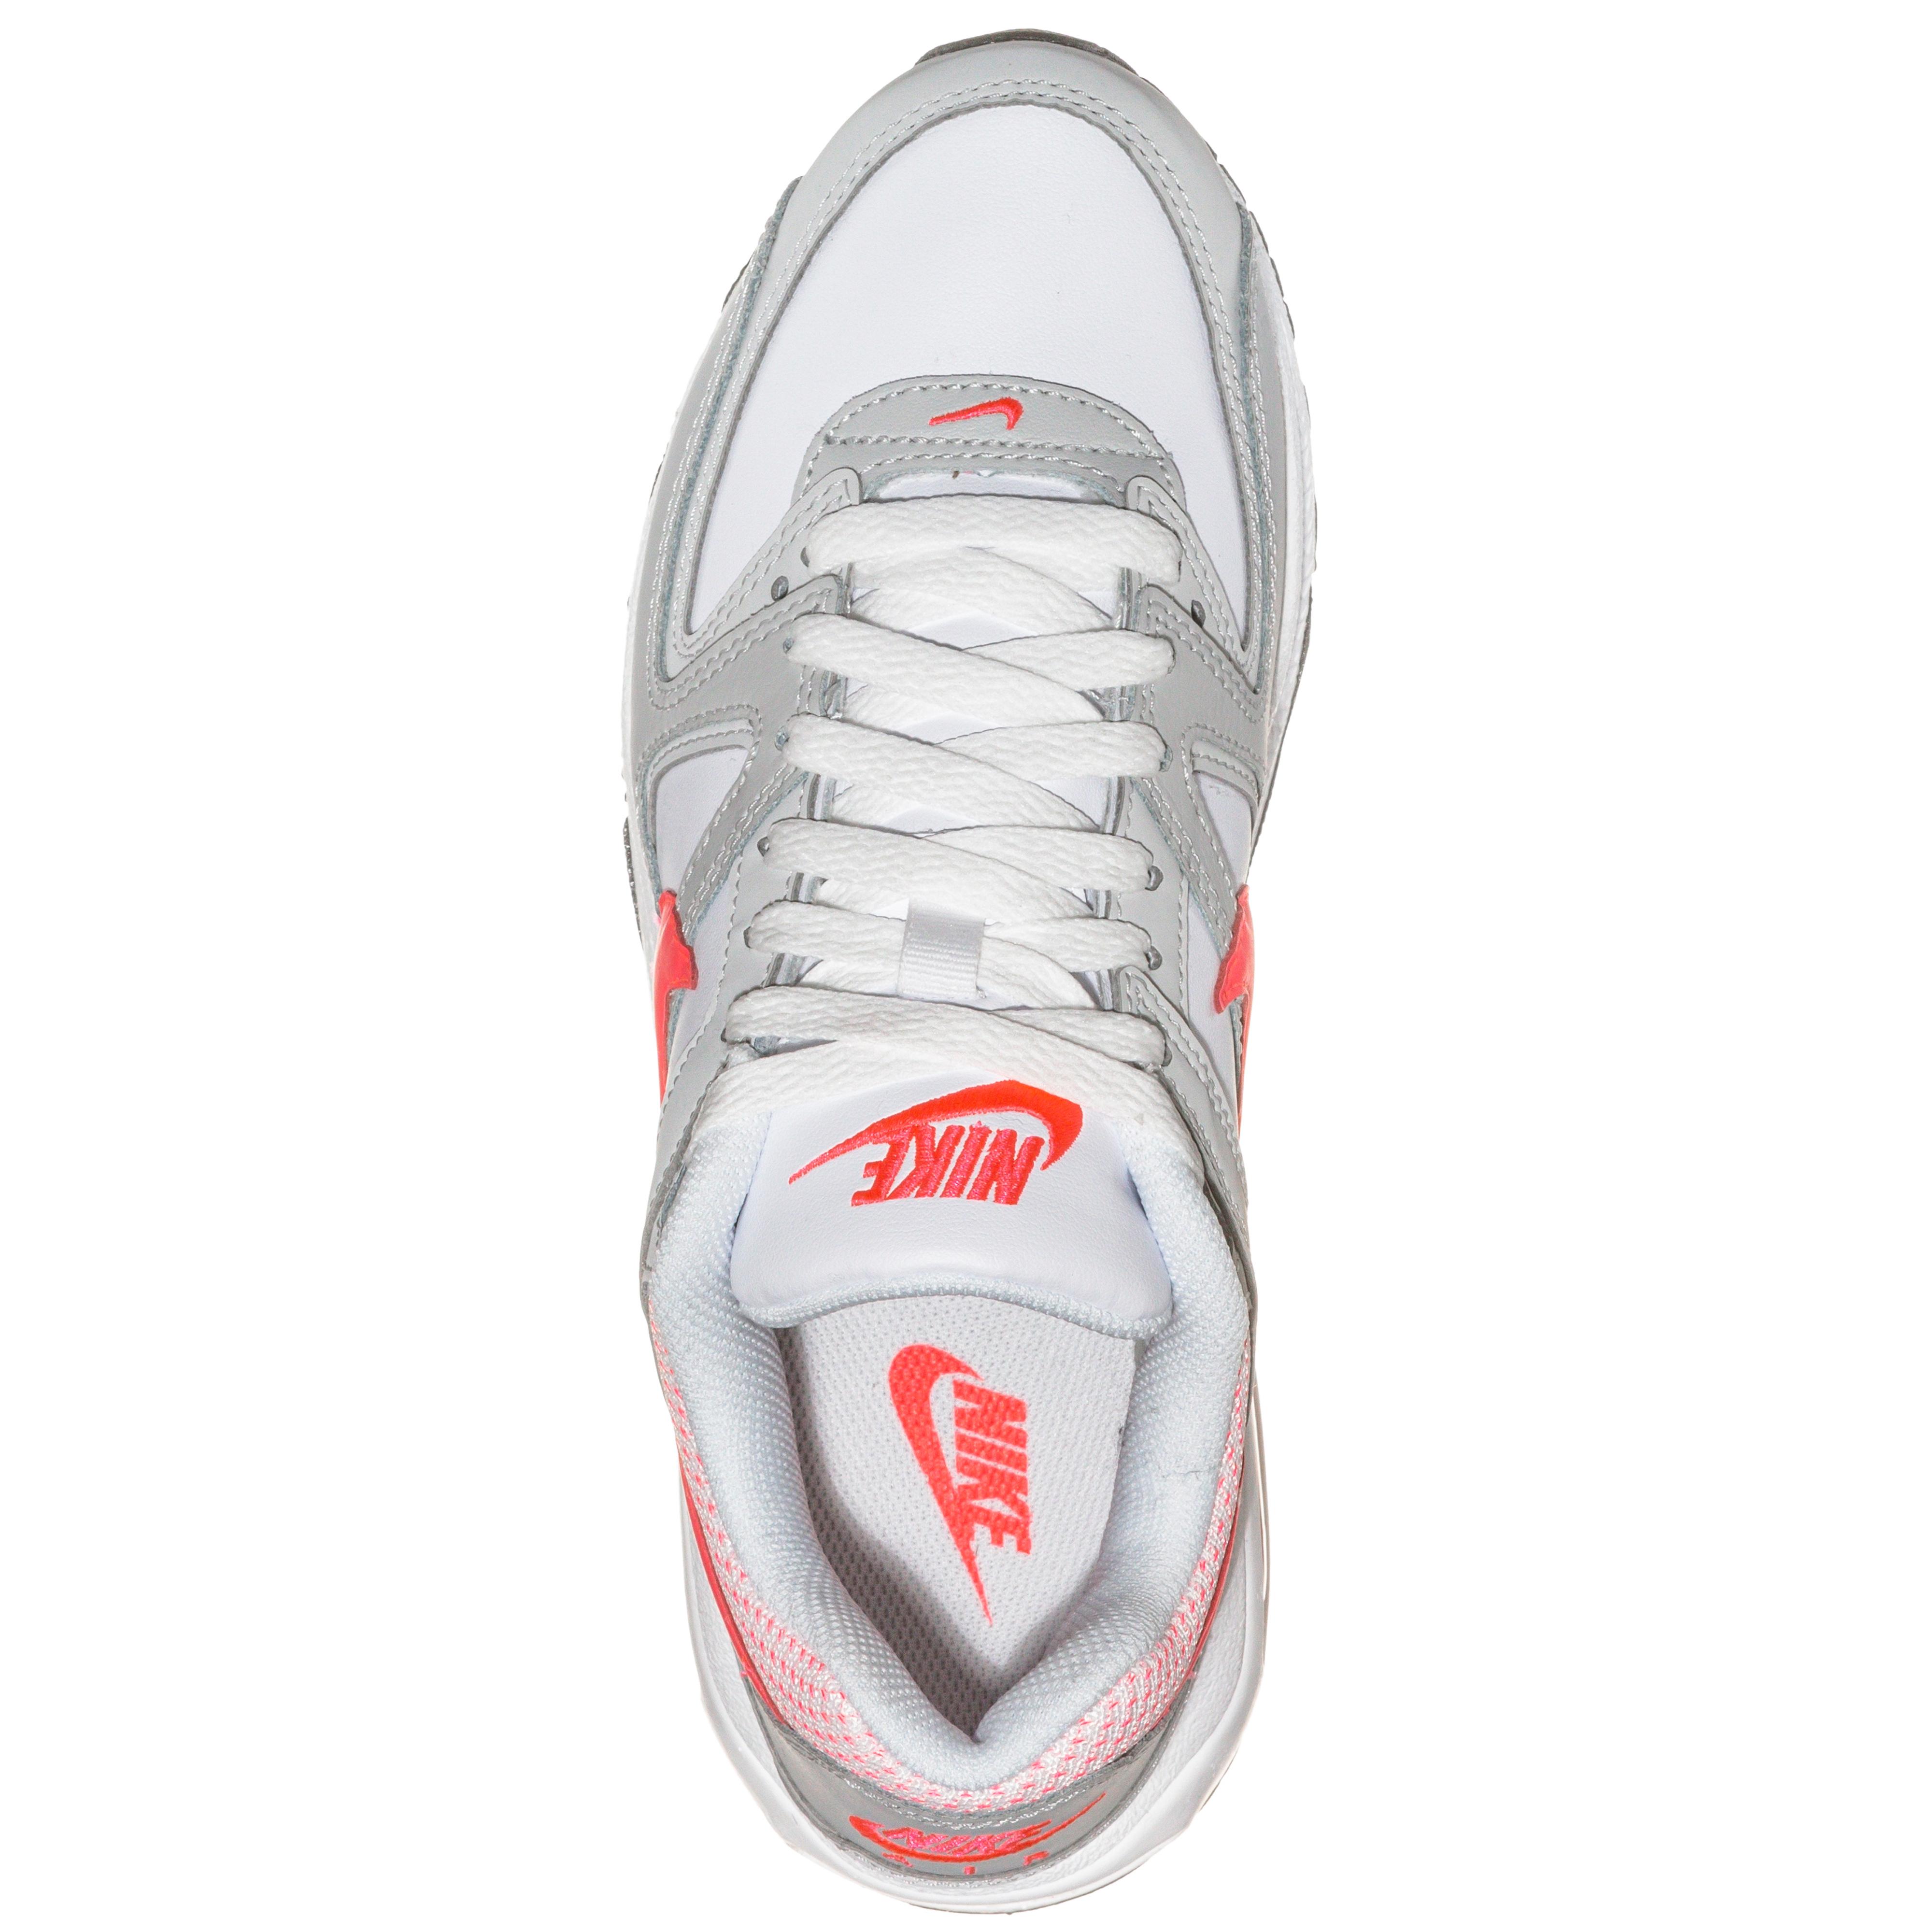 Nike Max Command Sneaker Damen white-hyper punch-light ash grey im Online kaufen